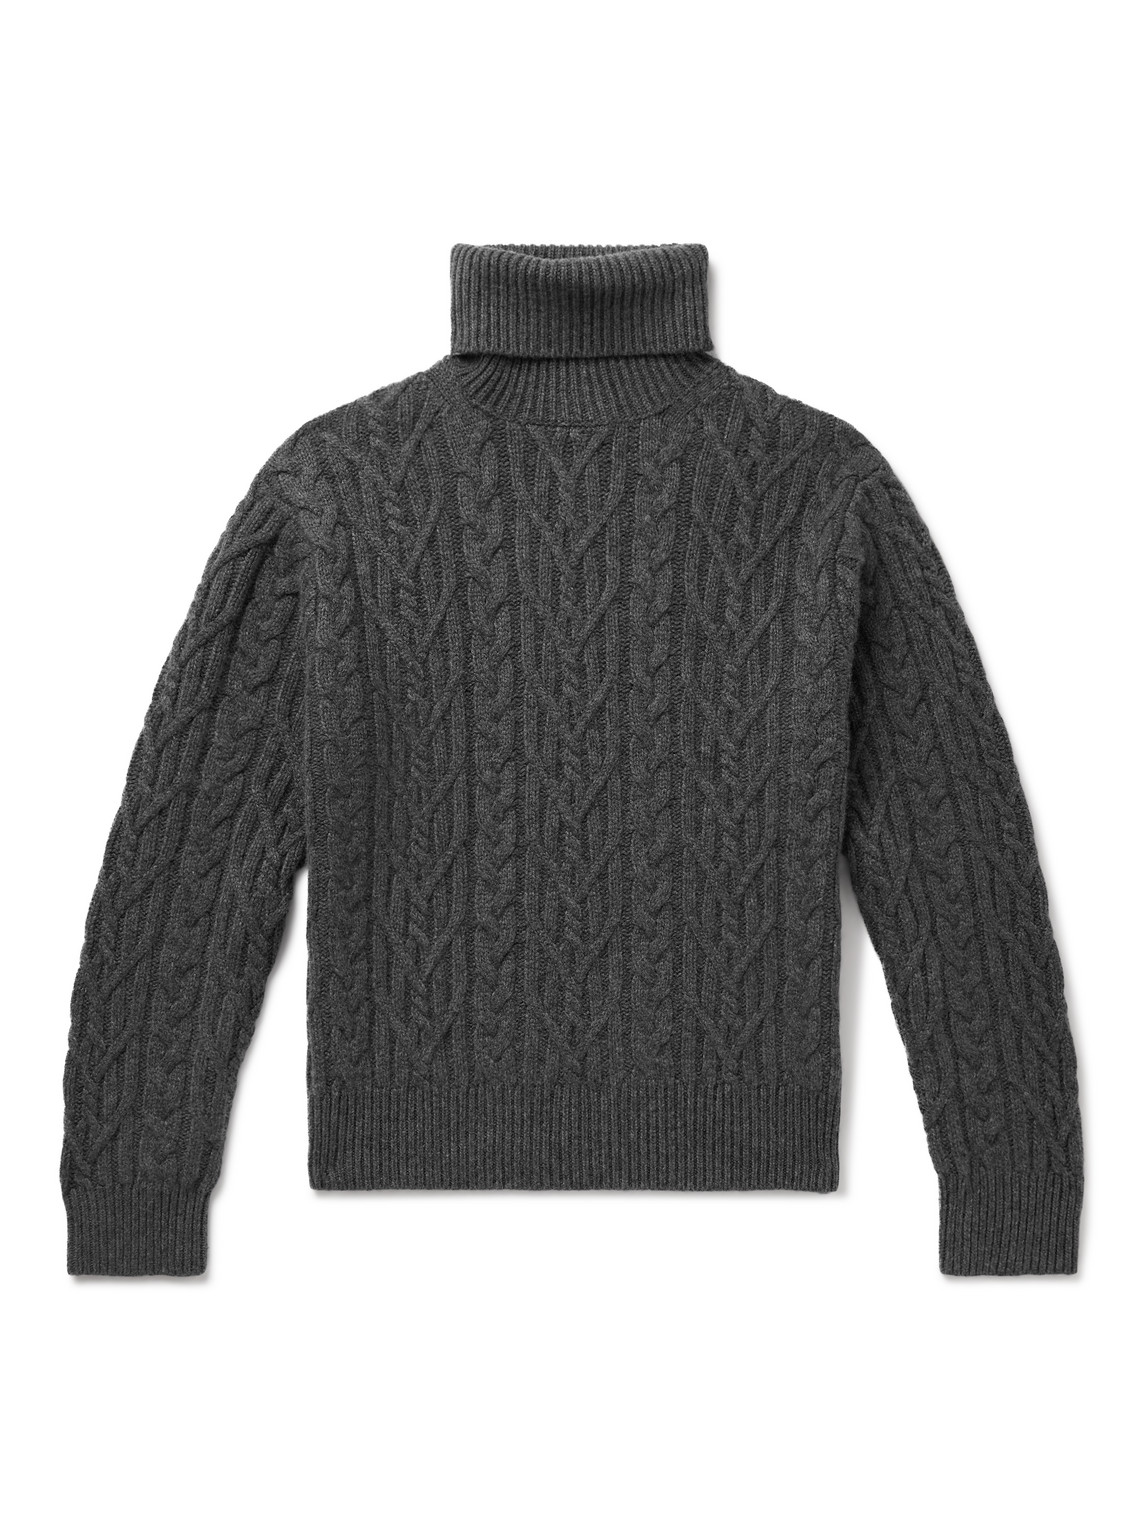 Nili Lotan - Gio Cable-Knit Cashmere Rollneck Sweater - Men - Gray - XL von Nili Lotan